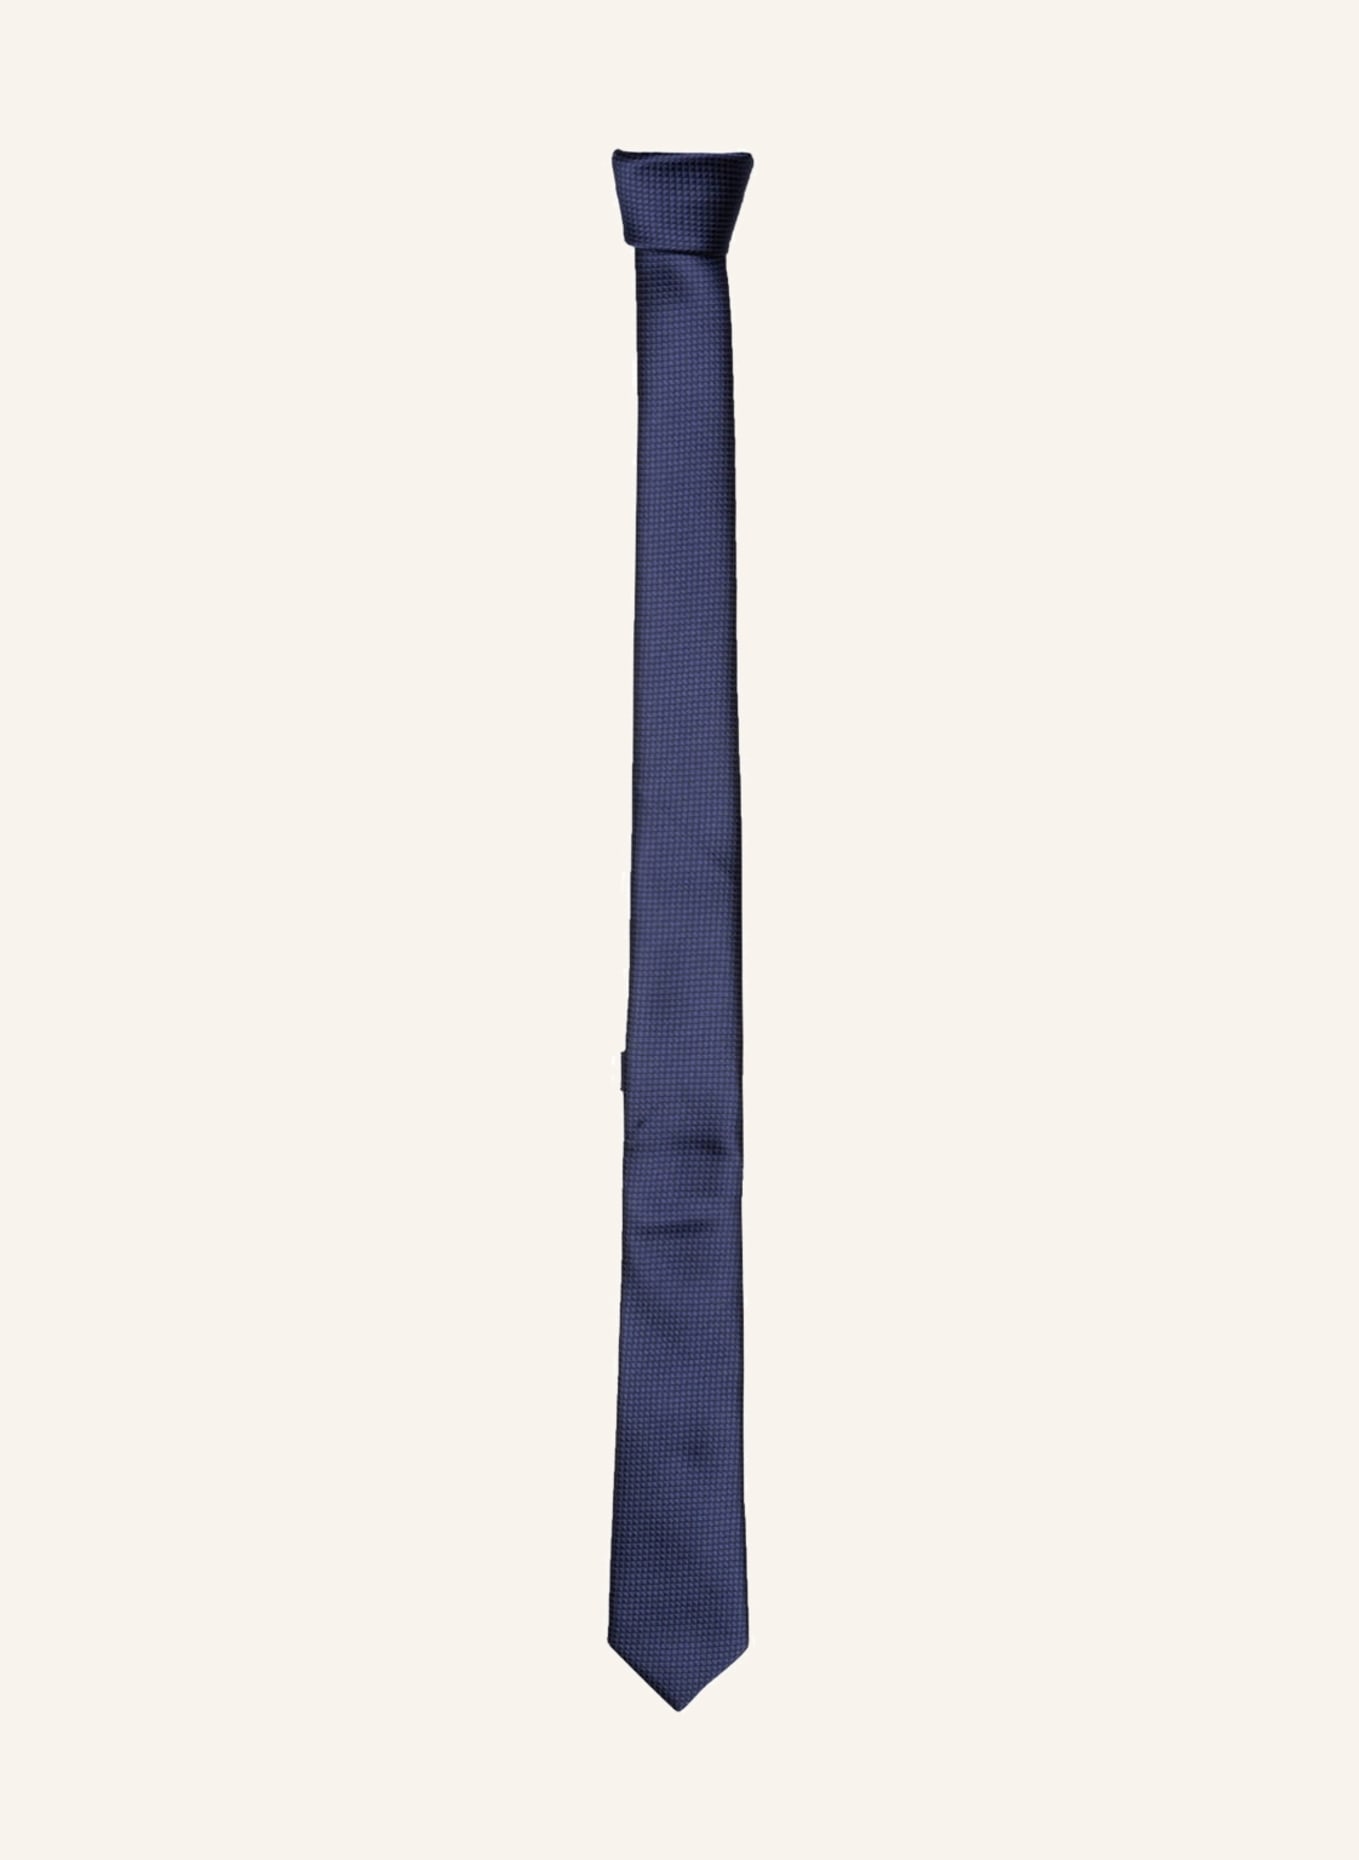 G.O.L. FINEST COLLECTION Krawatte, Farbe: DUNKELBLAU (Bild 2)